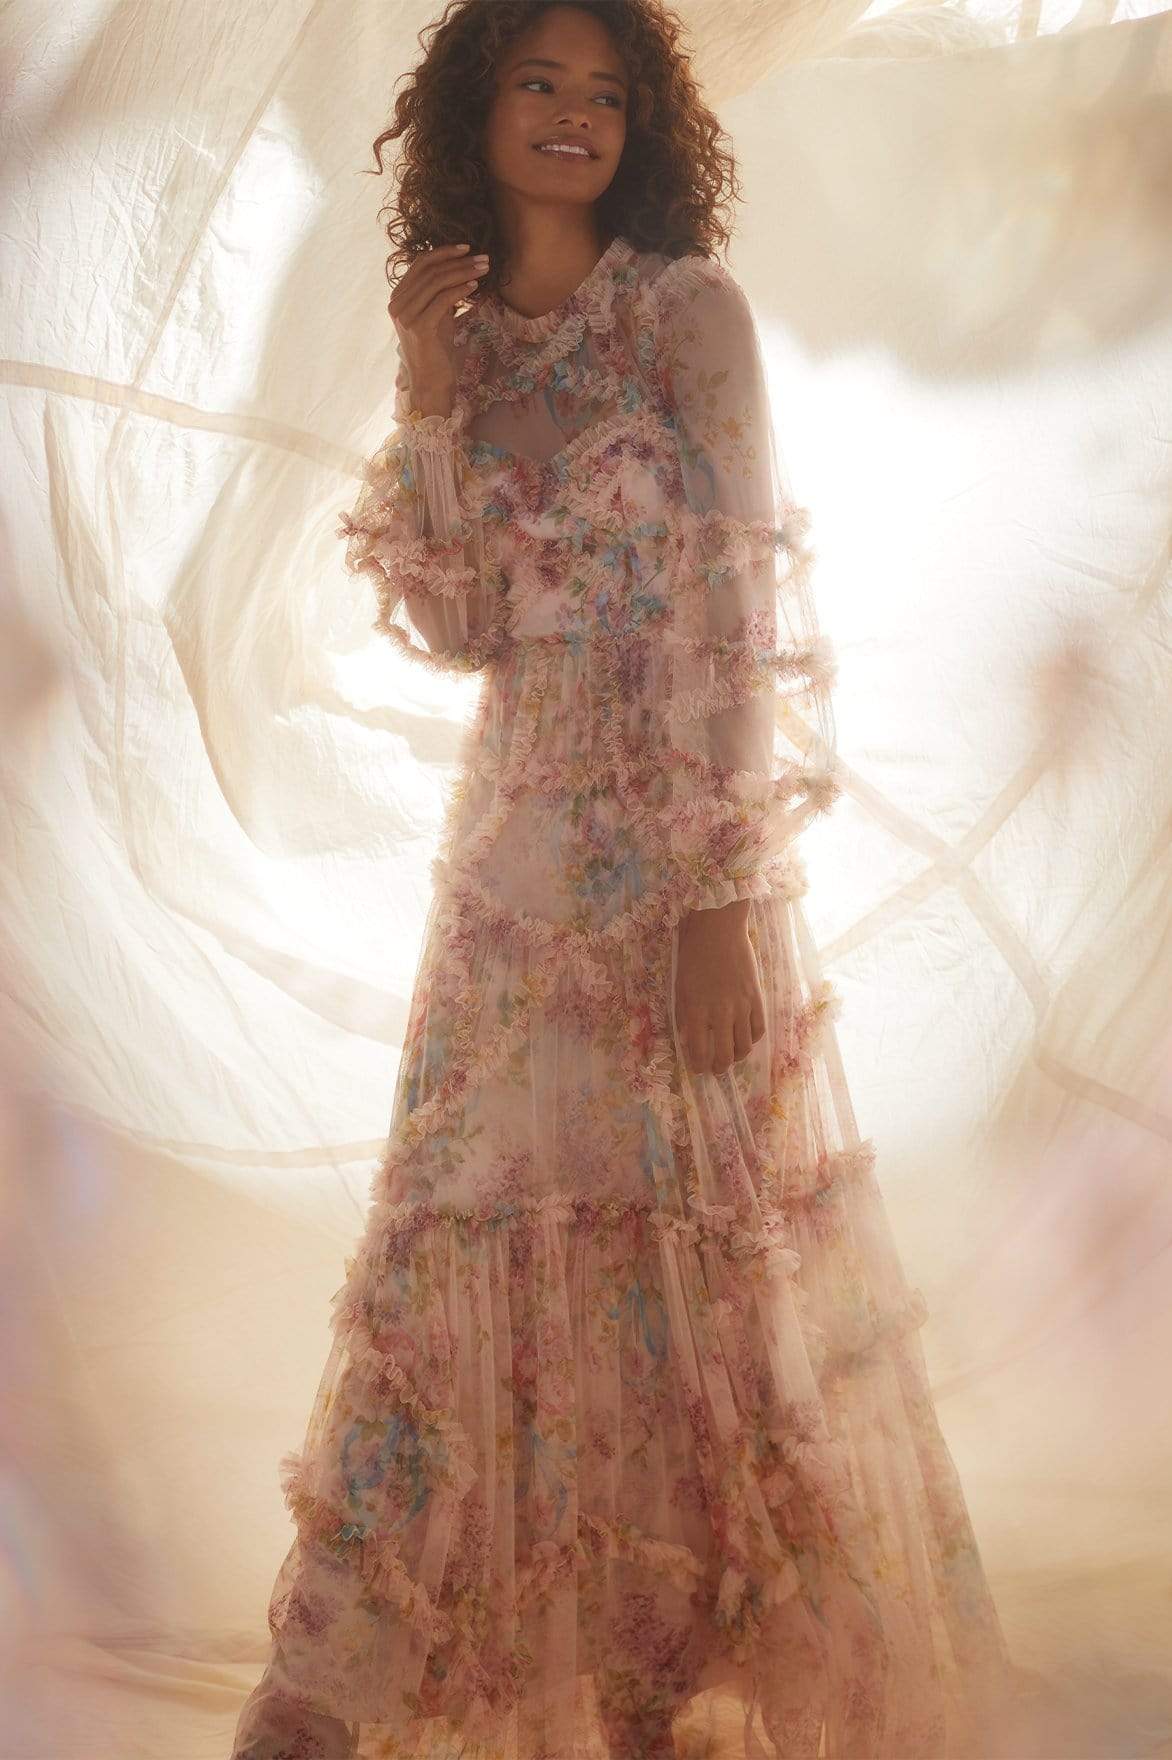 Ruffle- Sleeve Floral-Print Dress - Michael Cinco